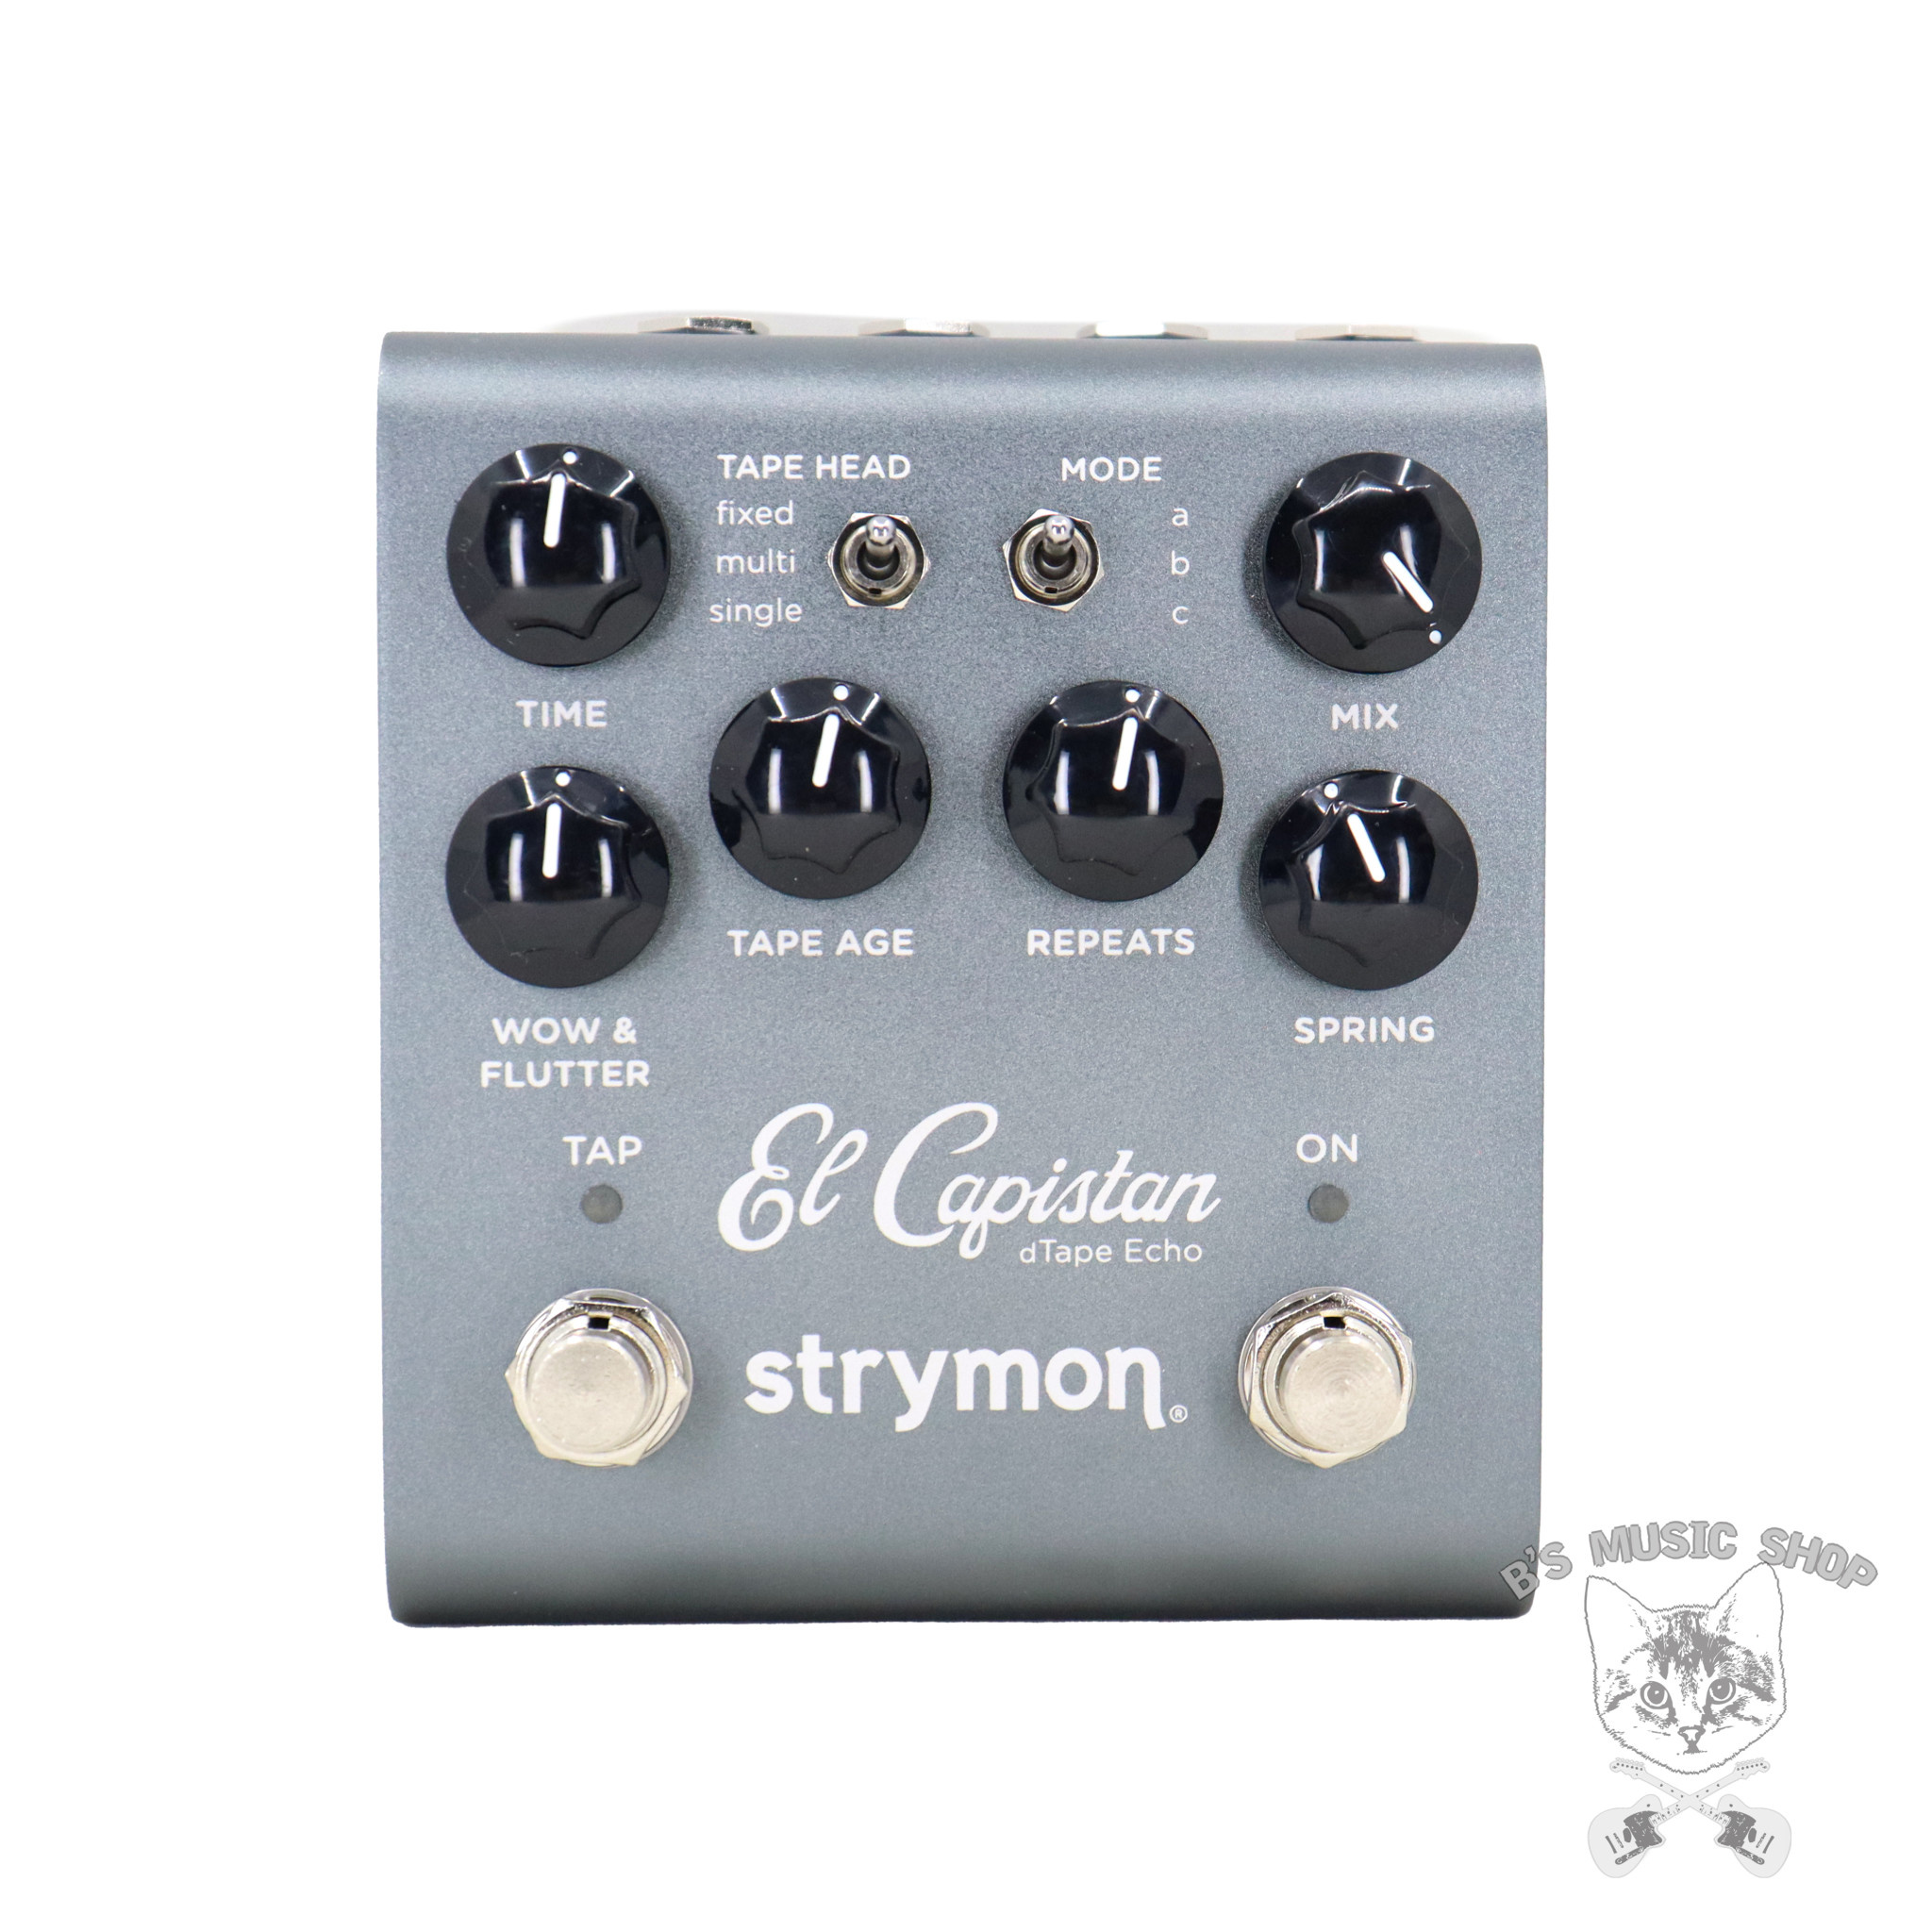 Strymon El Capistan V2 dTape Echo - B's Music Shop